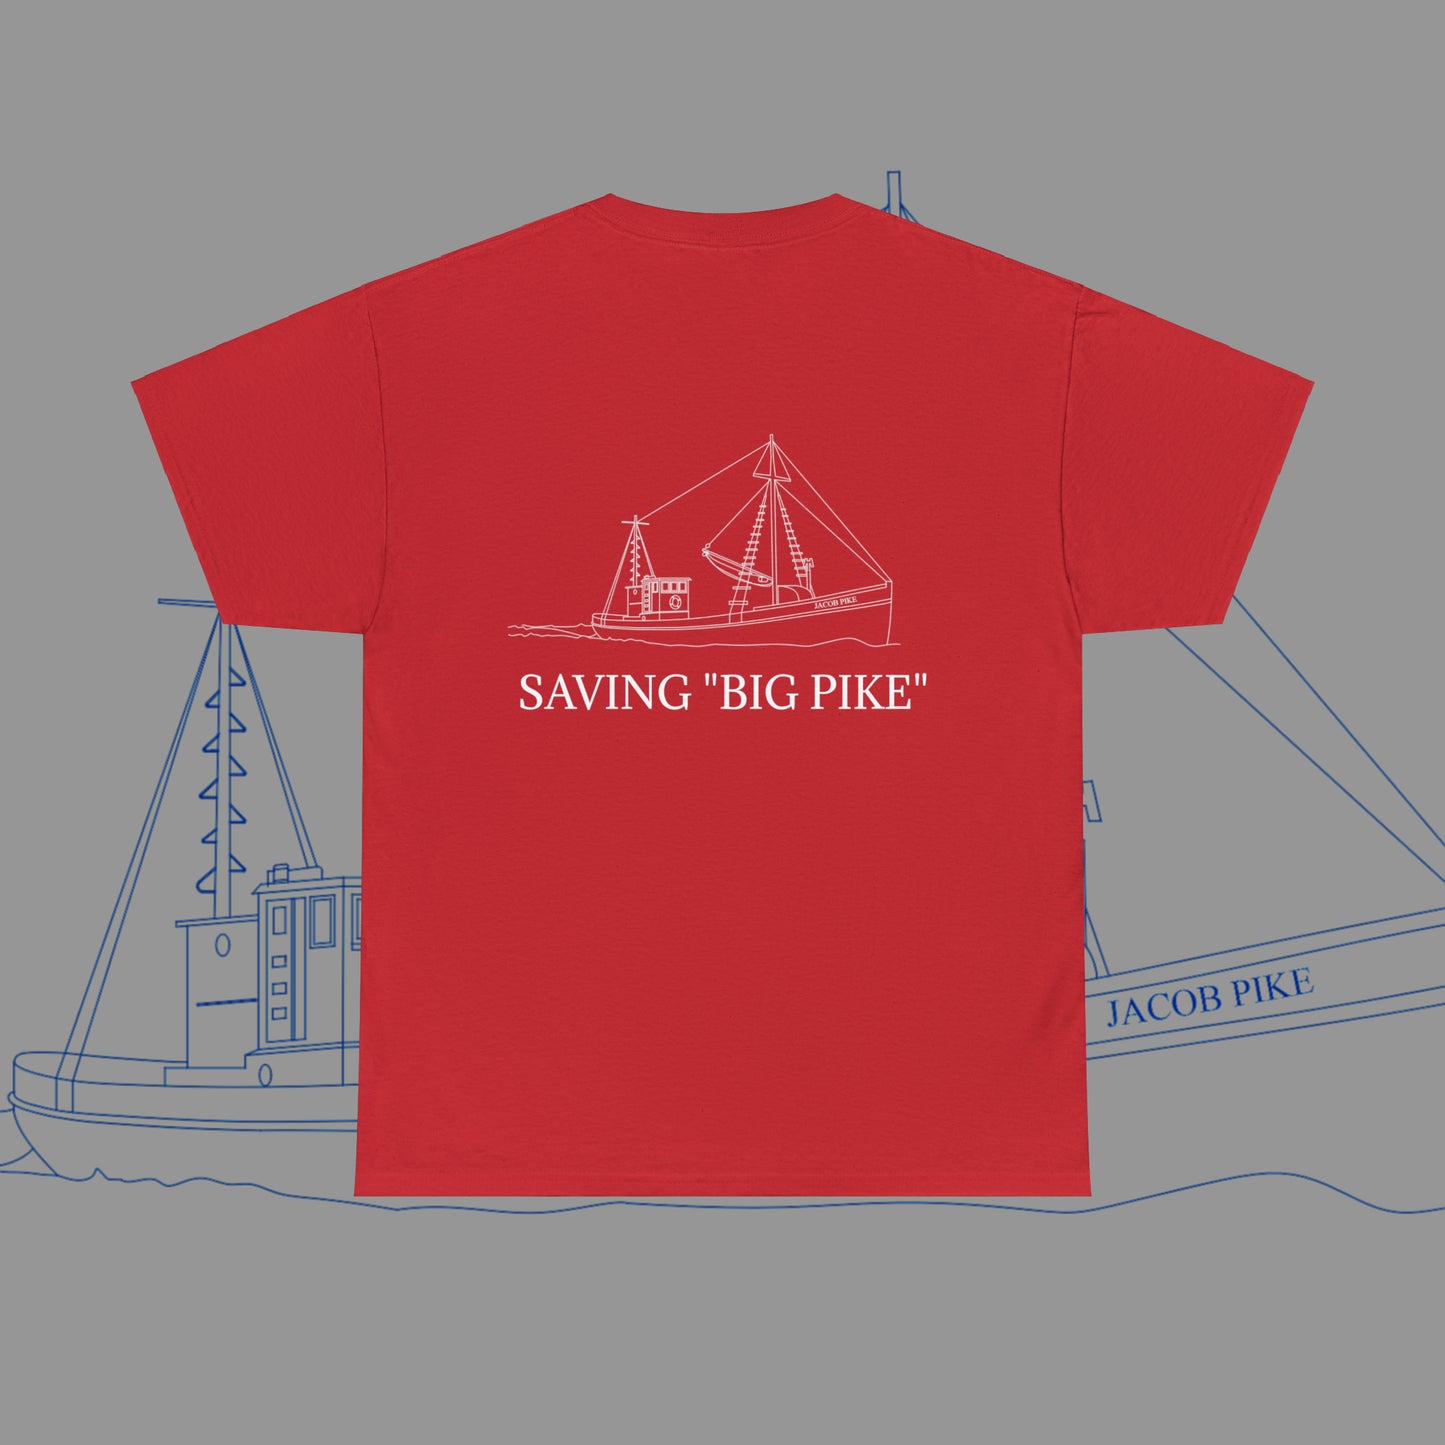 Save The Jacob Pike "Big Pike" Tee - Unisex